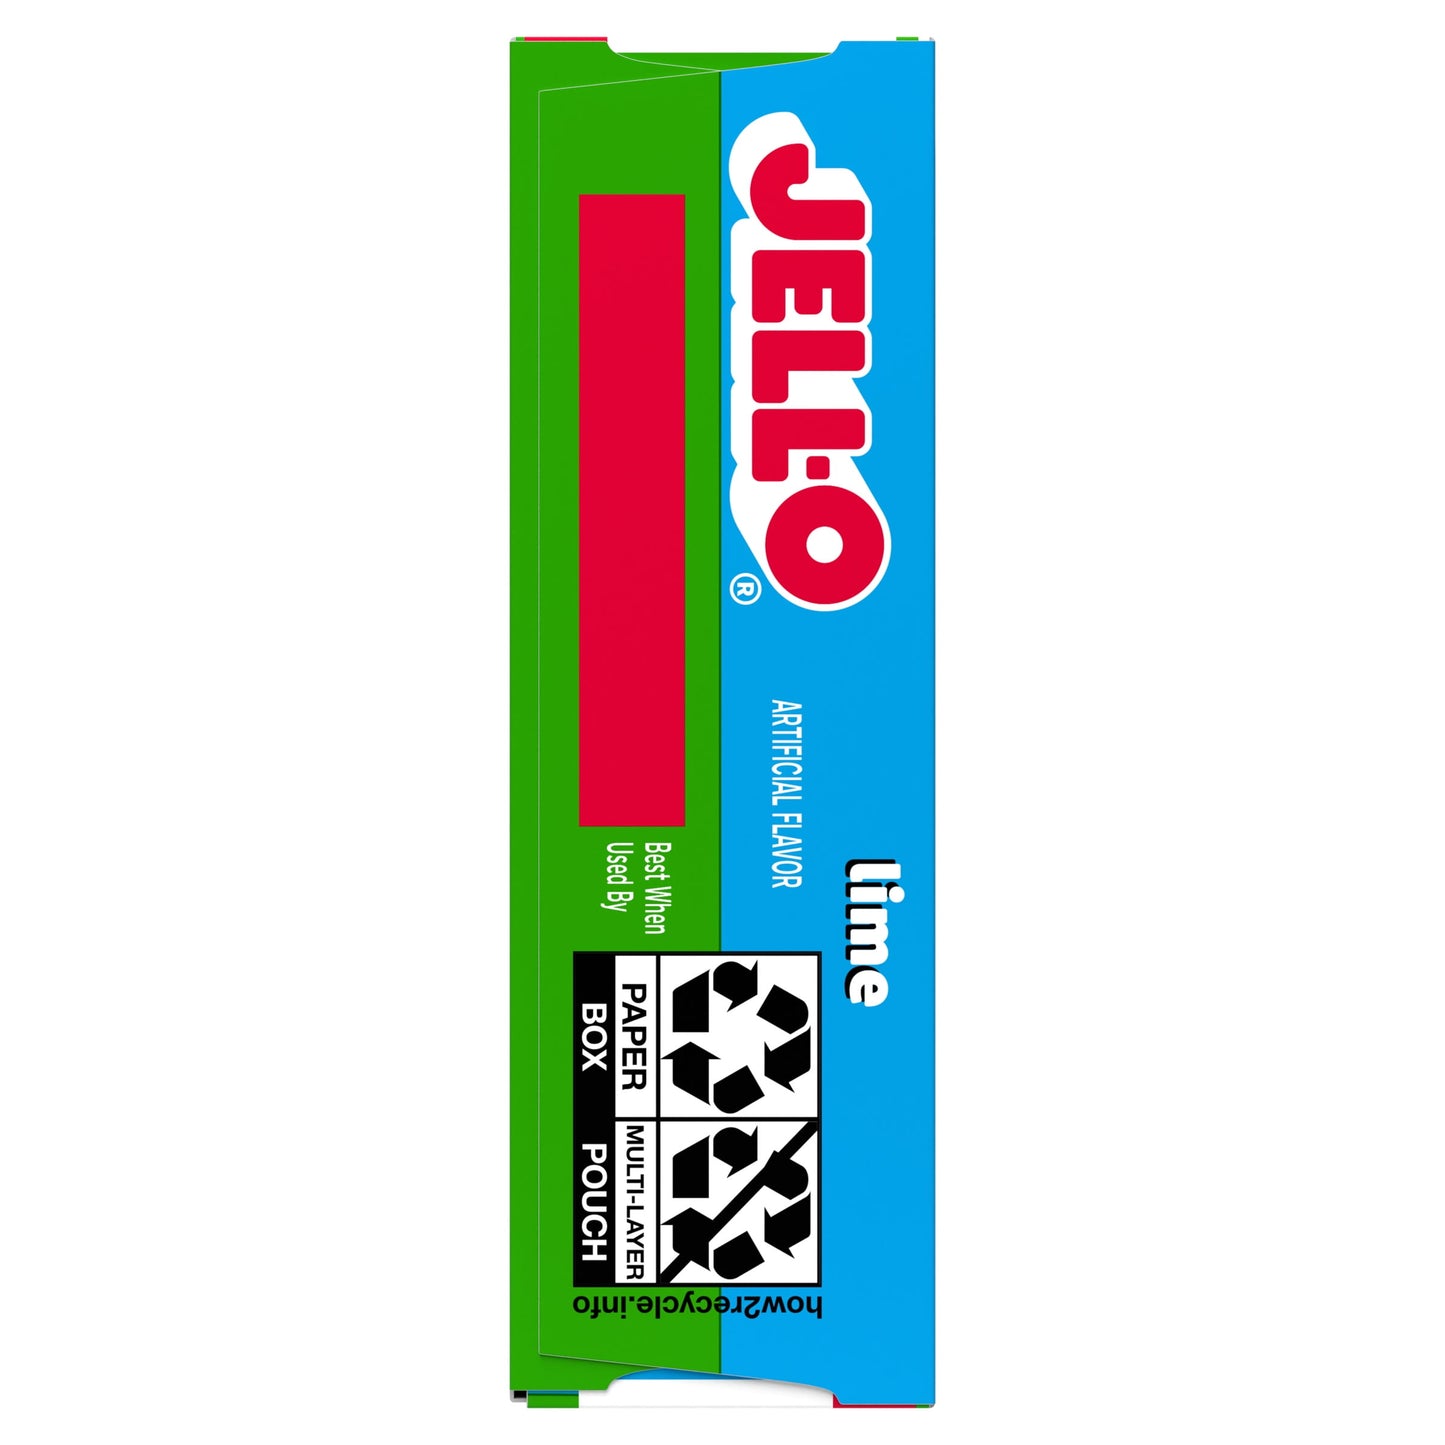 Jell-O Lime Artificially Flavored Zero Sugar Low Calorie Gelatin Dessert Mix, Family Size, 0.6 oz Box